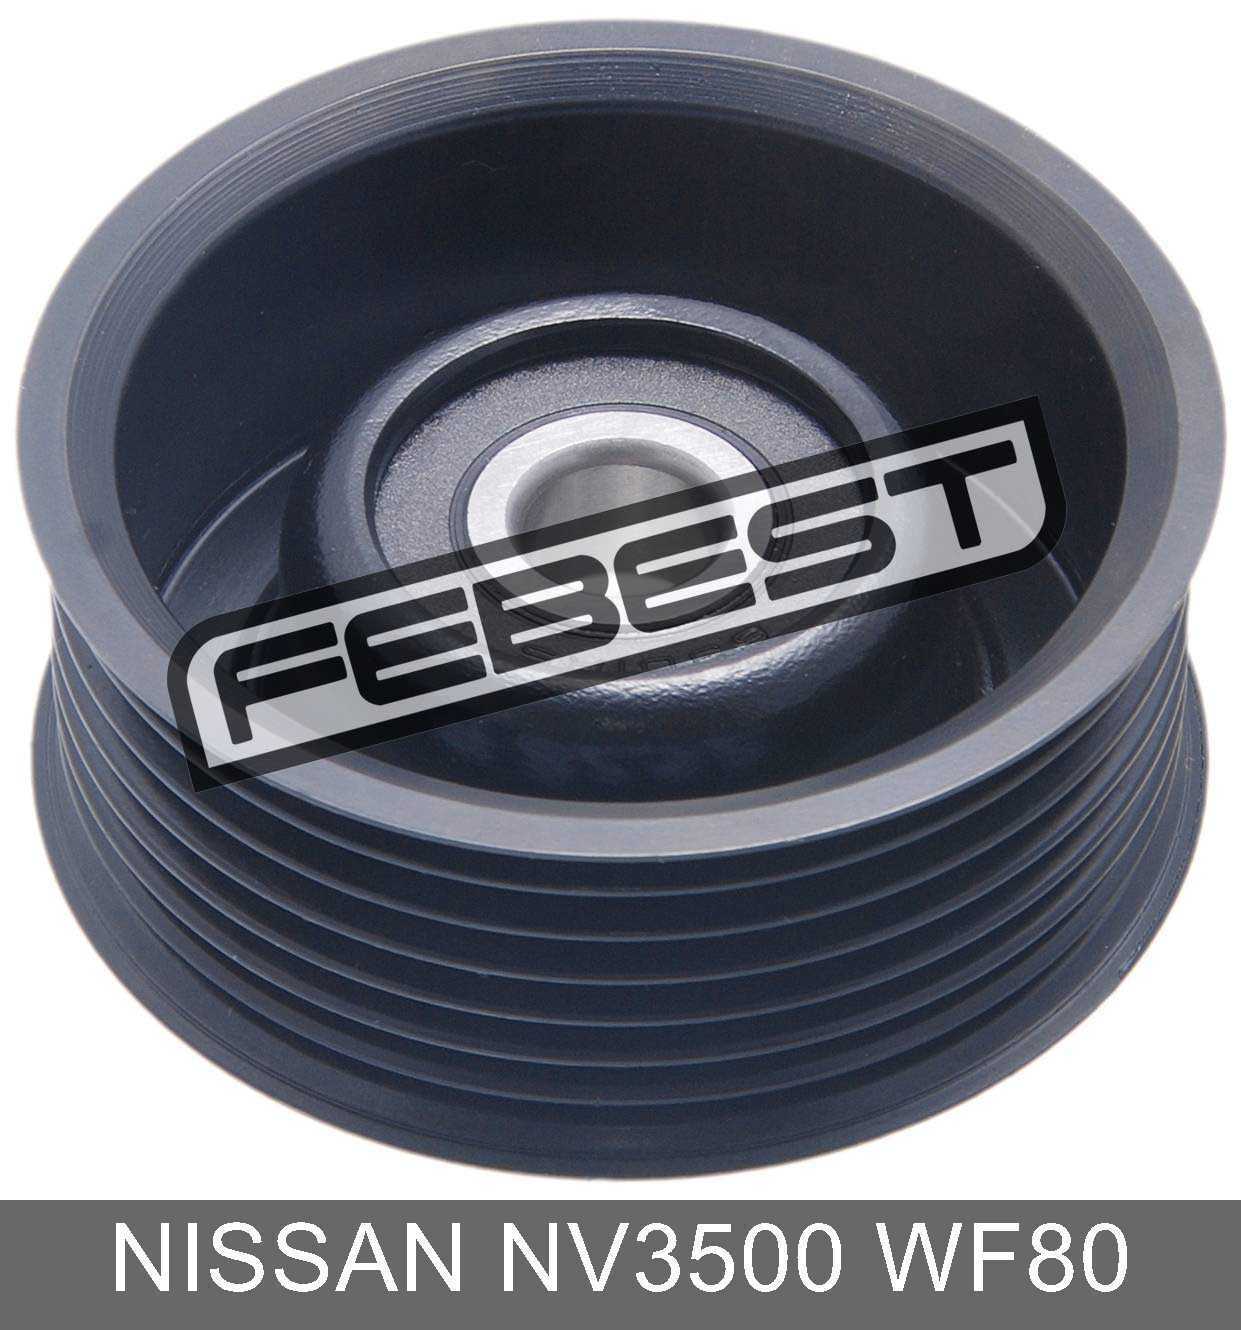 55% OFF Pulley Idler For Nissan Wf80 2012- Sale Nv3500